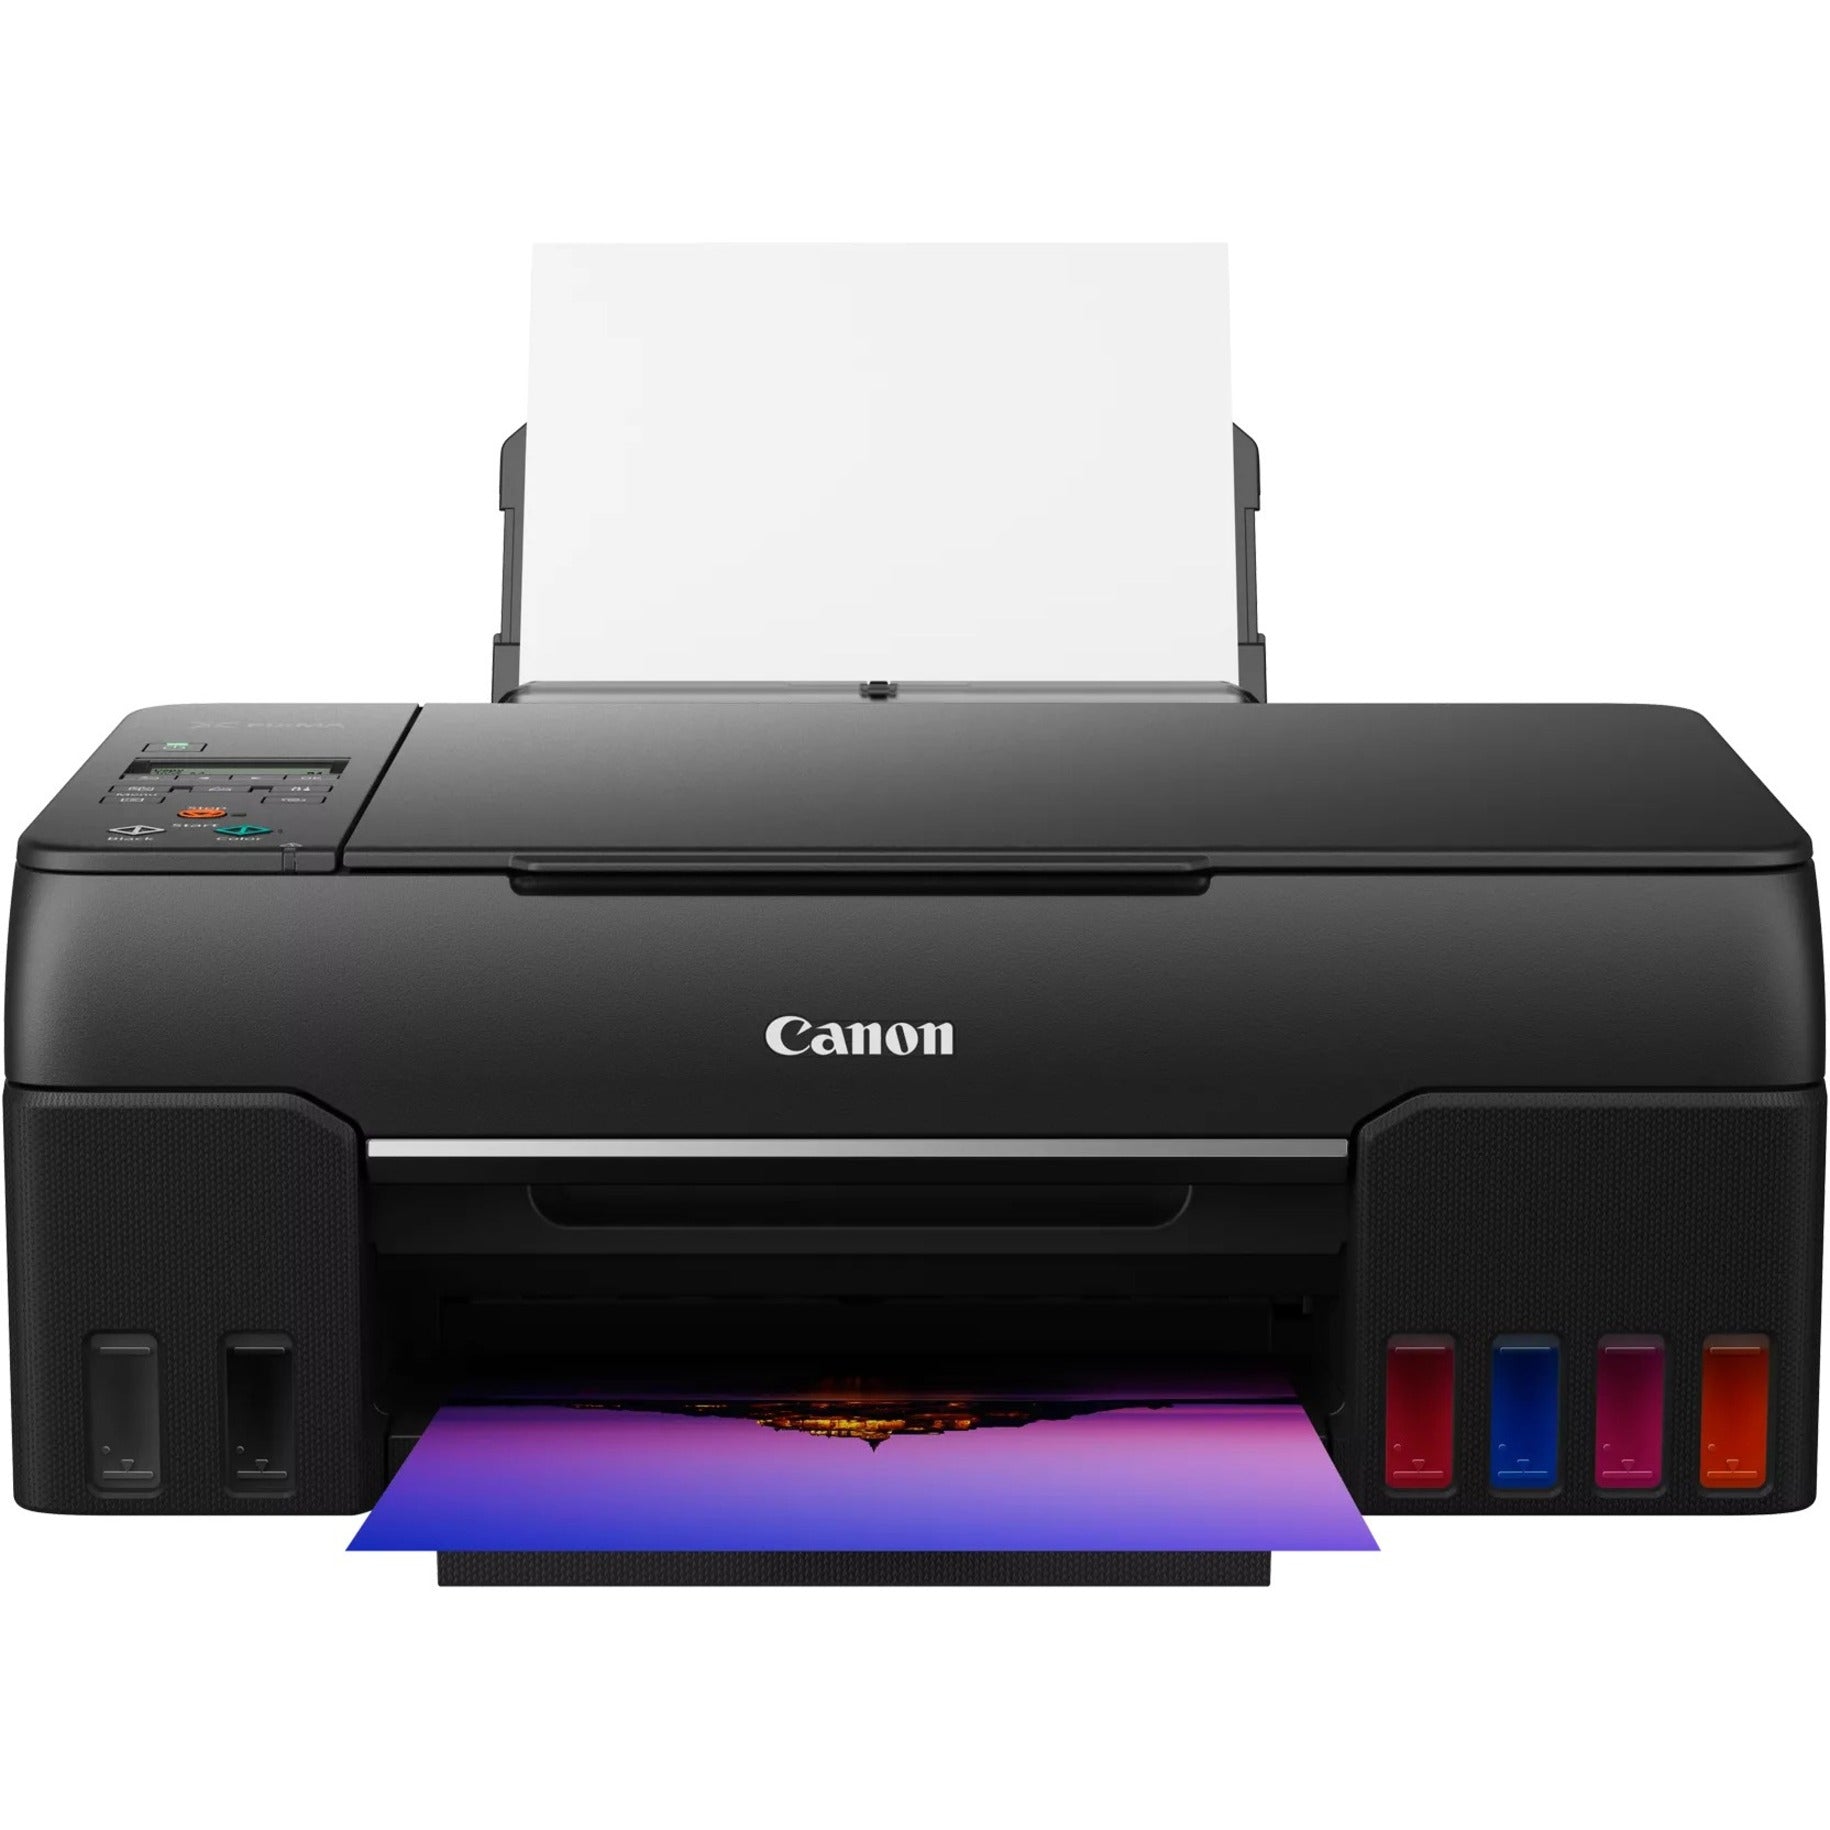 Canon 4620C002 PIXMA G620 Wireless All-In-One Inkjet Printer, Black